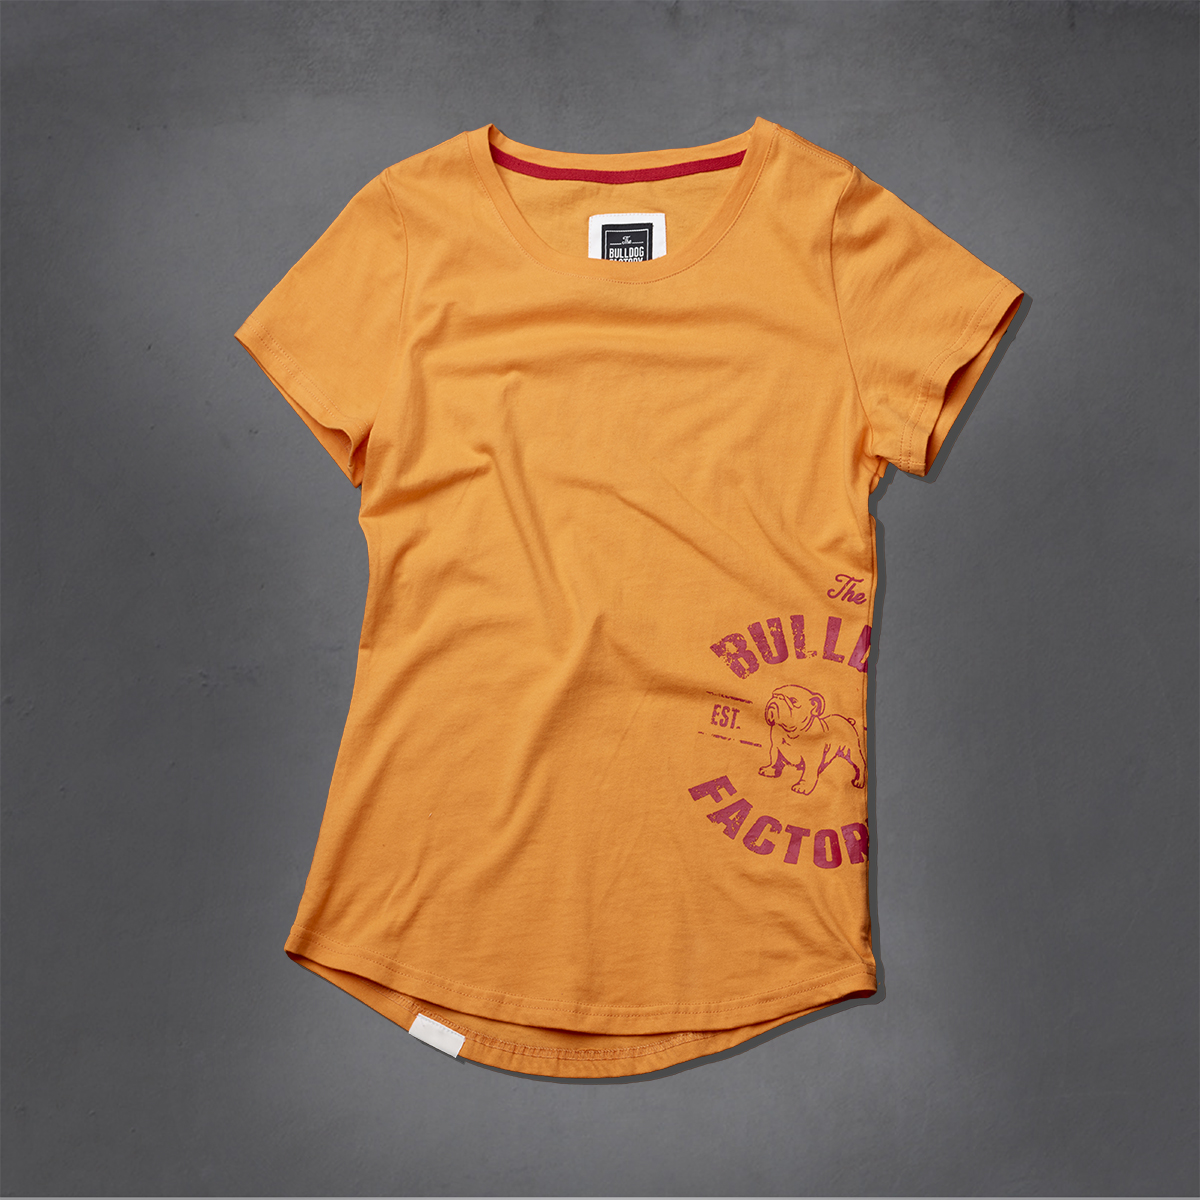 Girls Heritage Printed Ts - Flame Orange